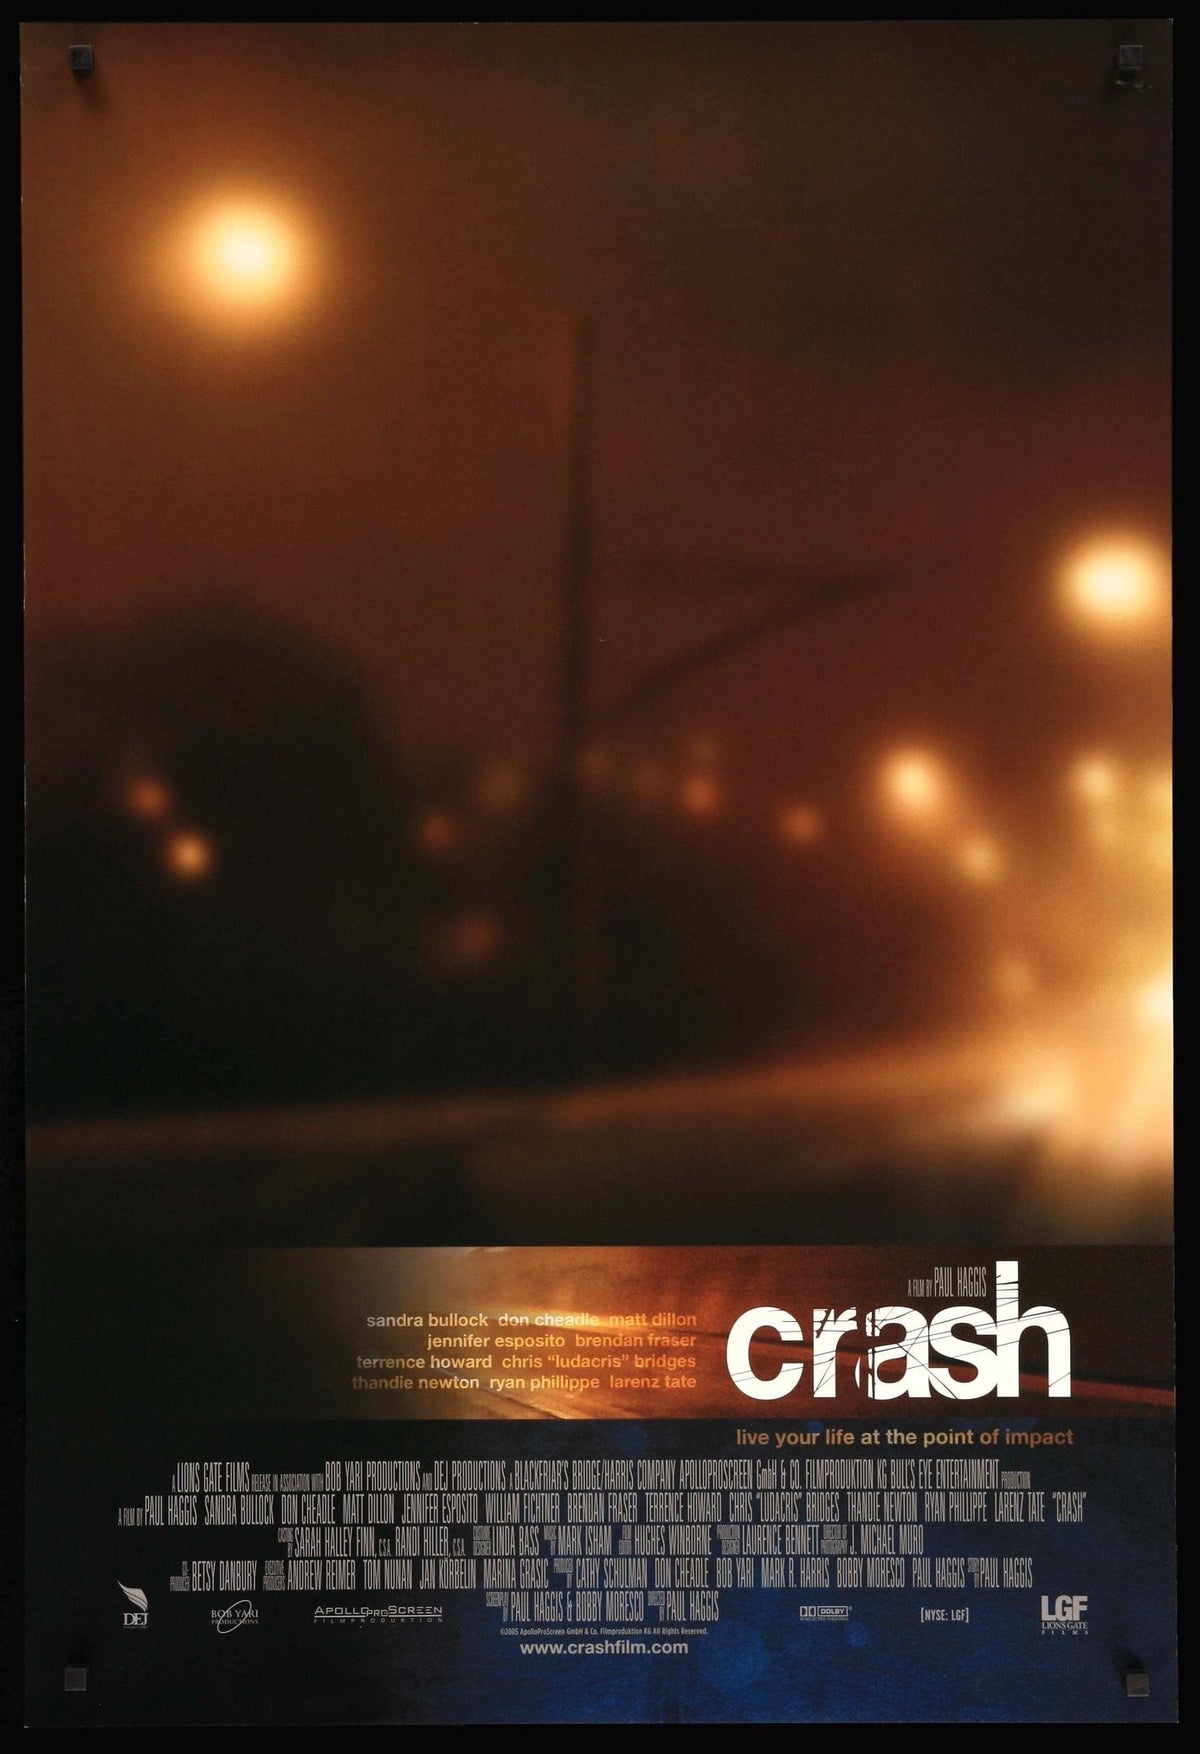 Crash (2004) original movie poster for sale at Original Film Art